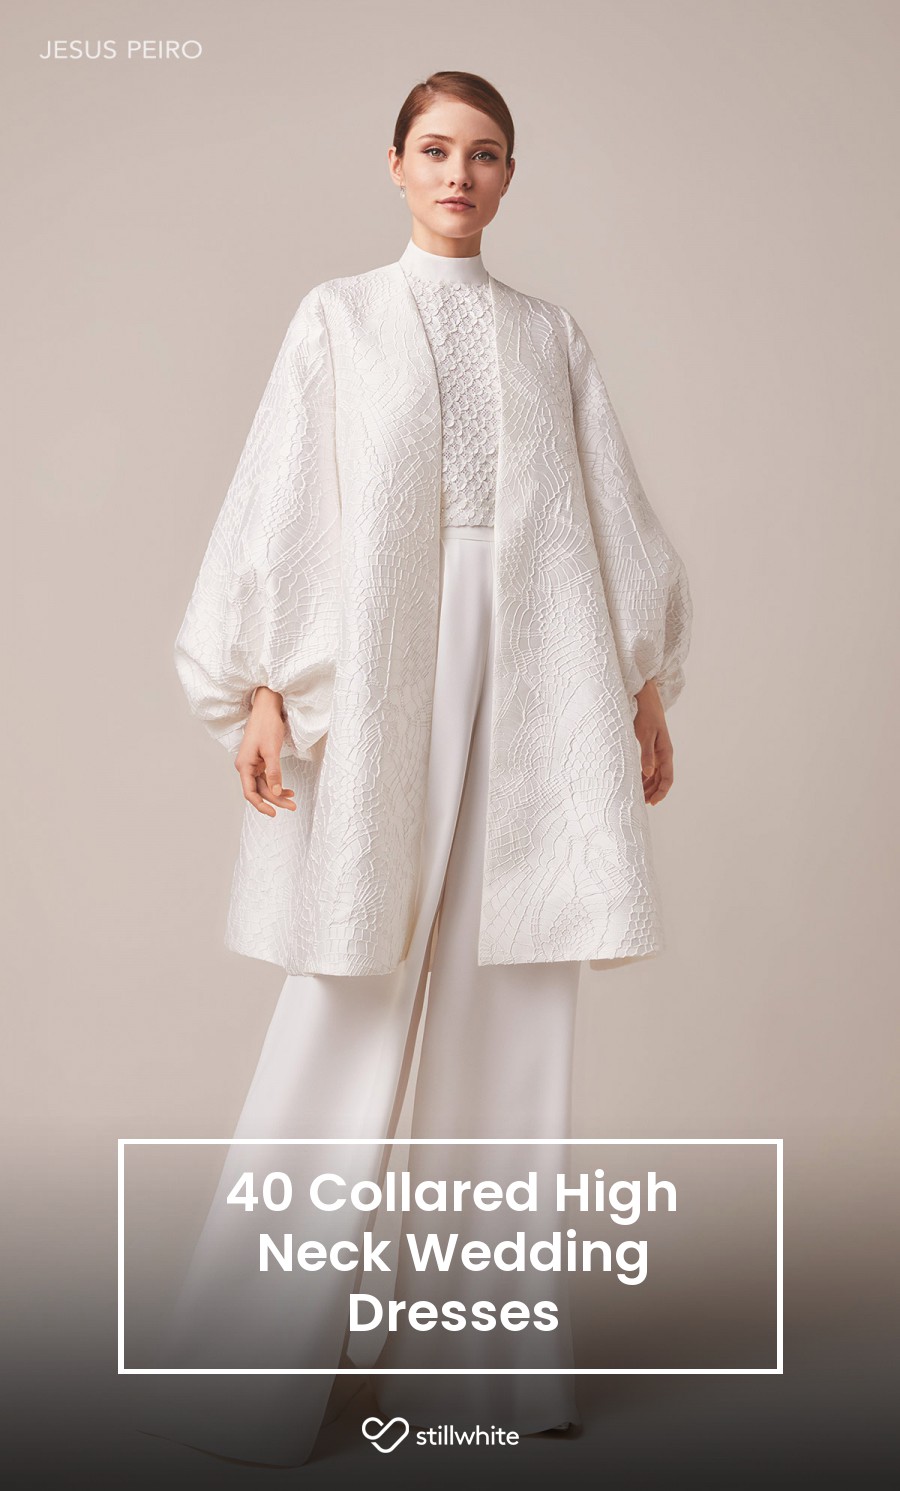 40 Collared High Neck Wedding Dresses – Stillwhite Blog